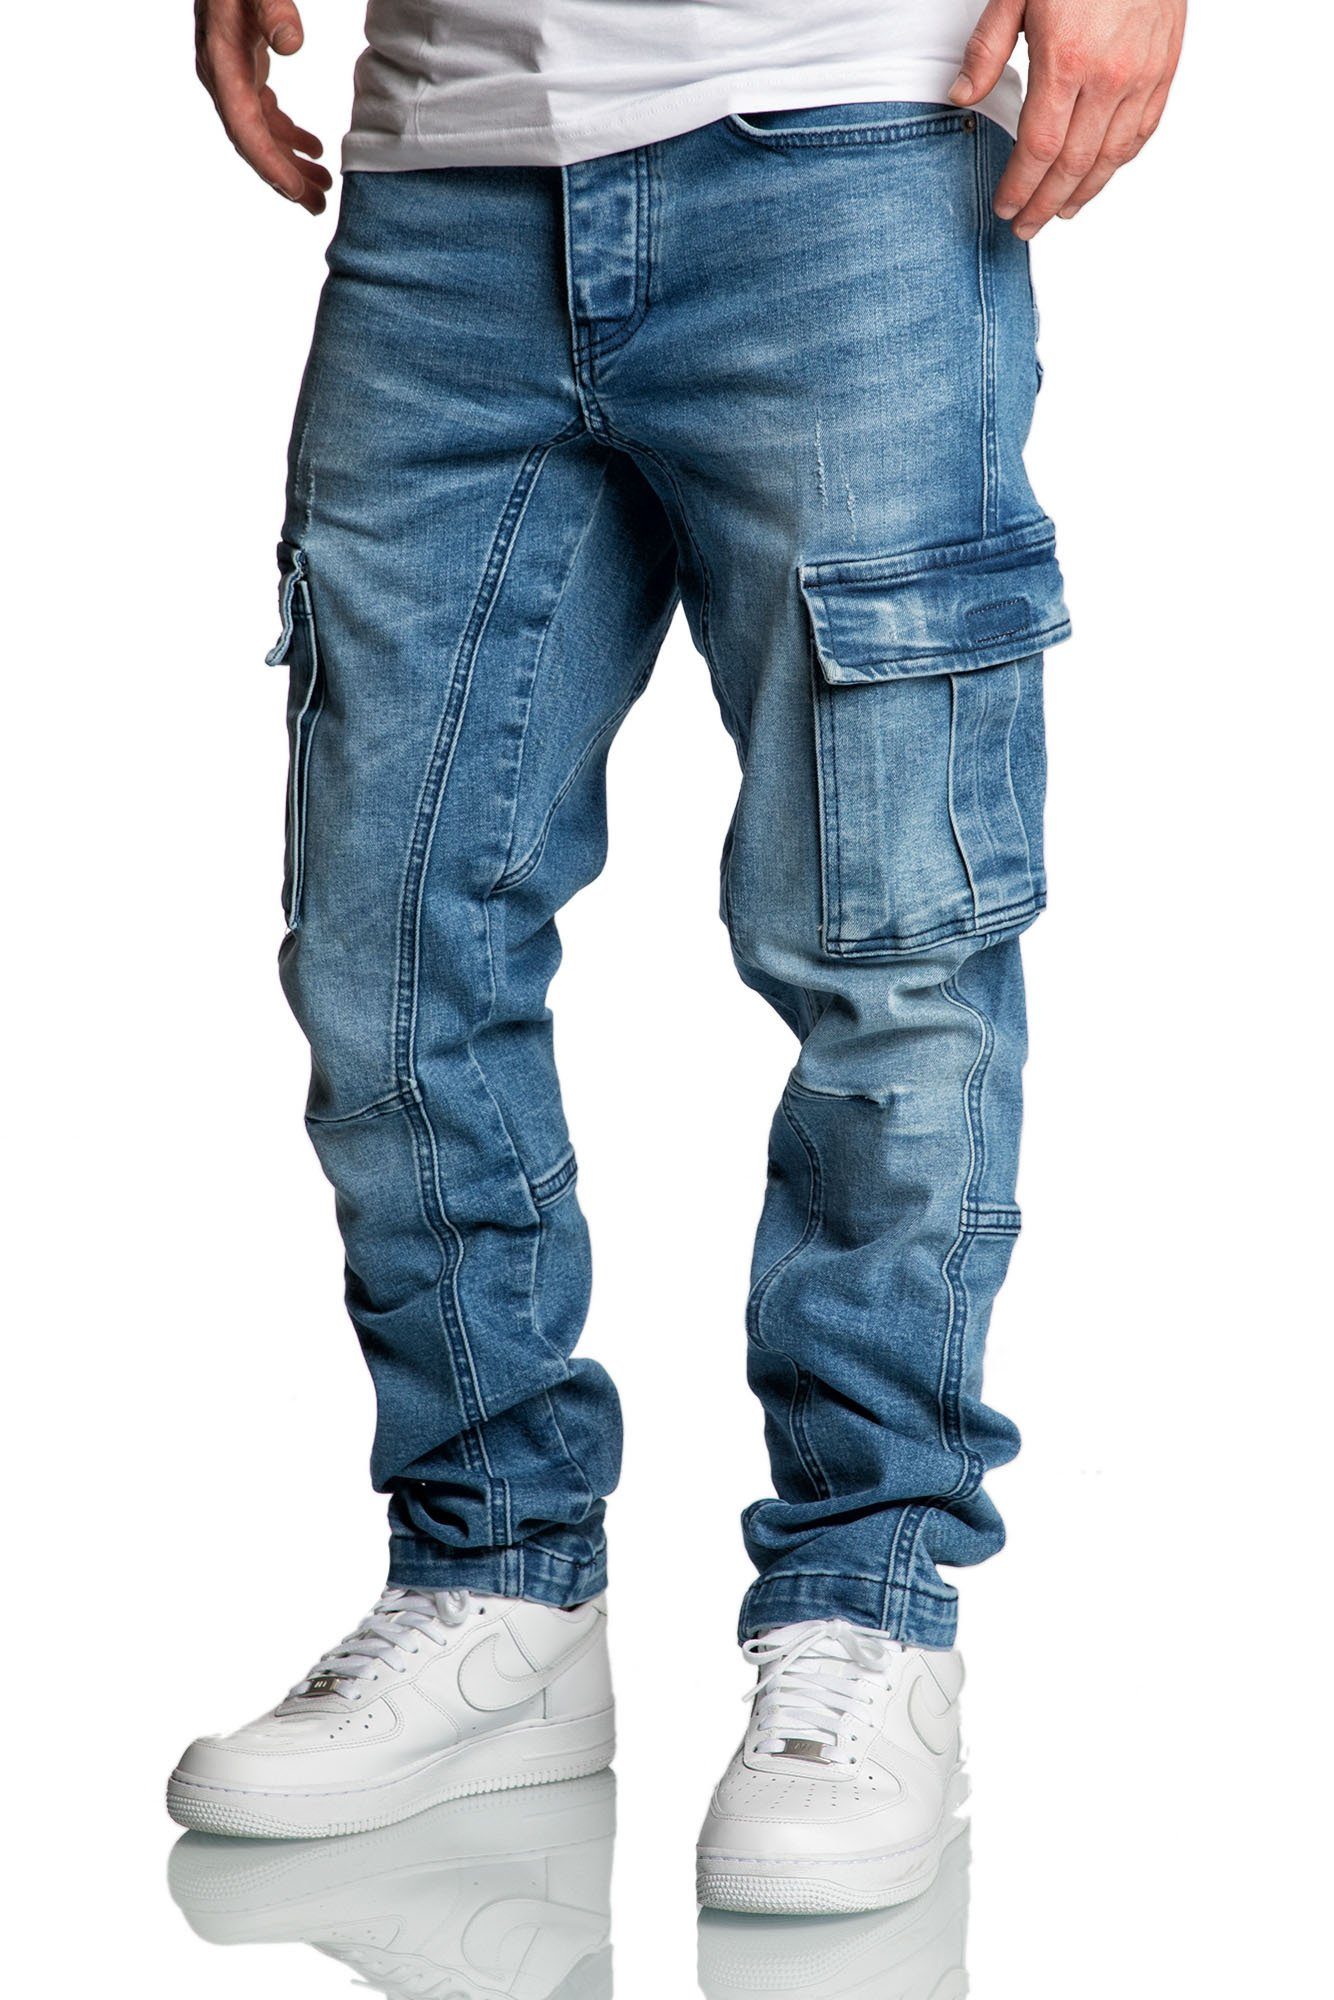 Amaci&Sons Straight-Jeans CARY Herren Regular Fit Cargo Denim Jeans Hose